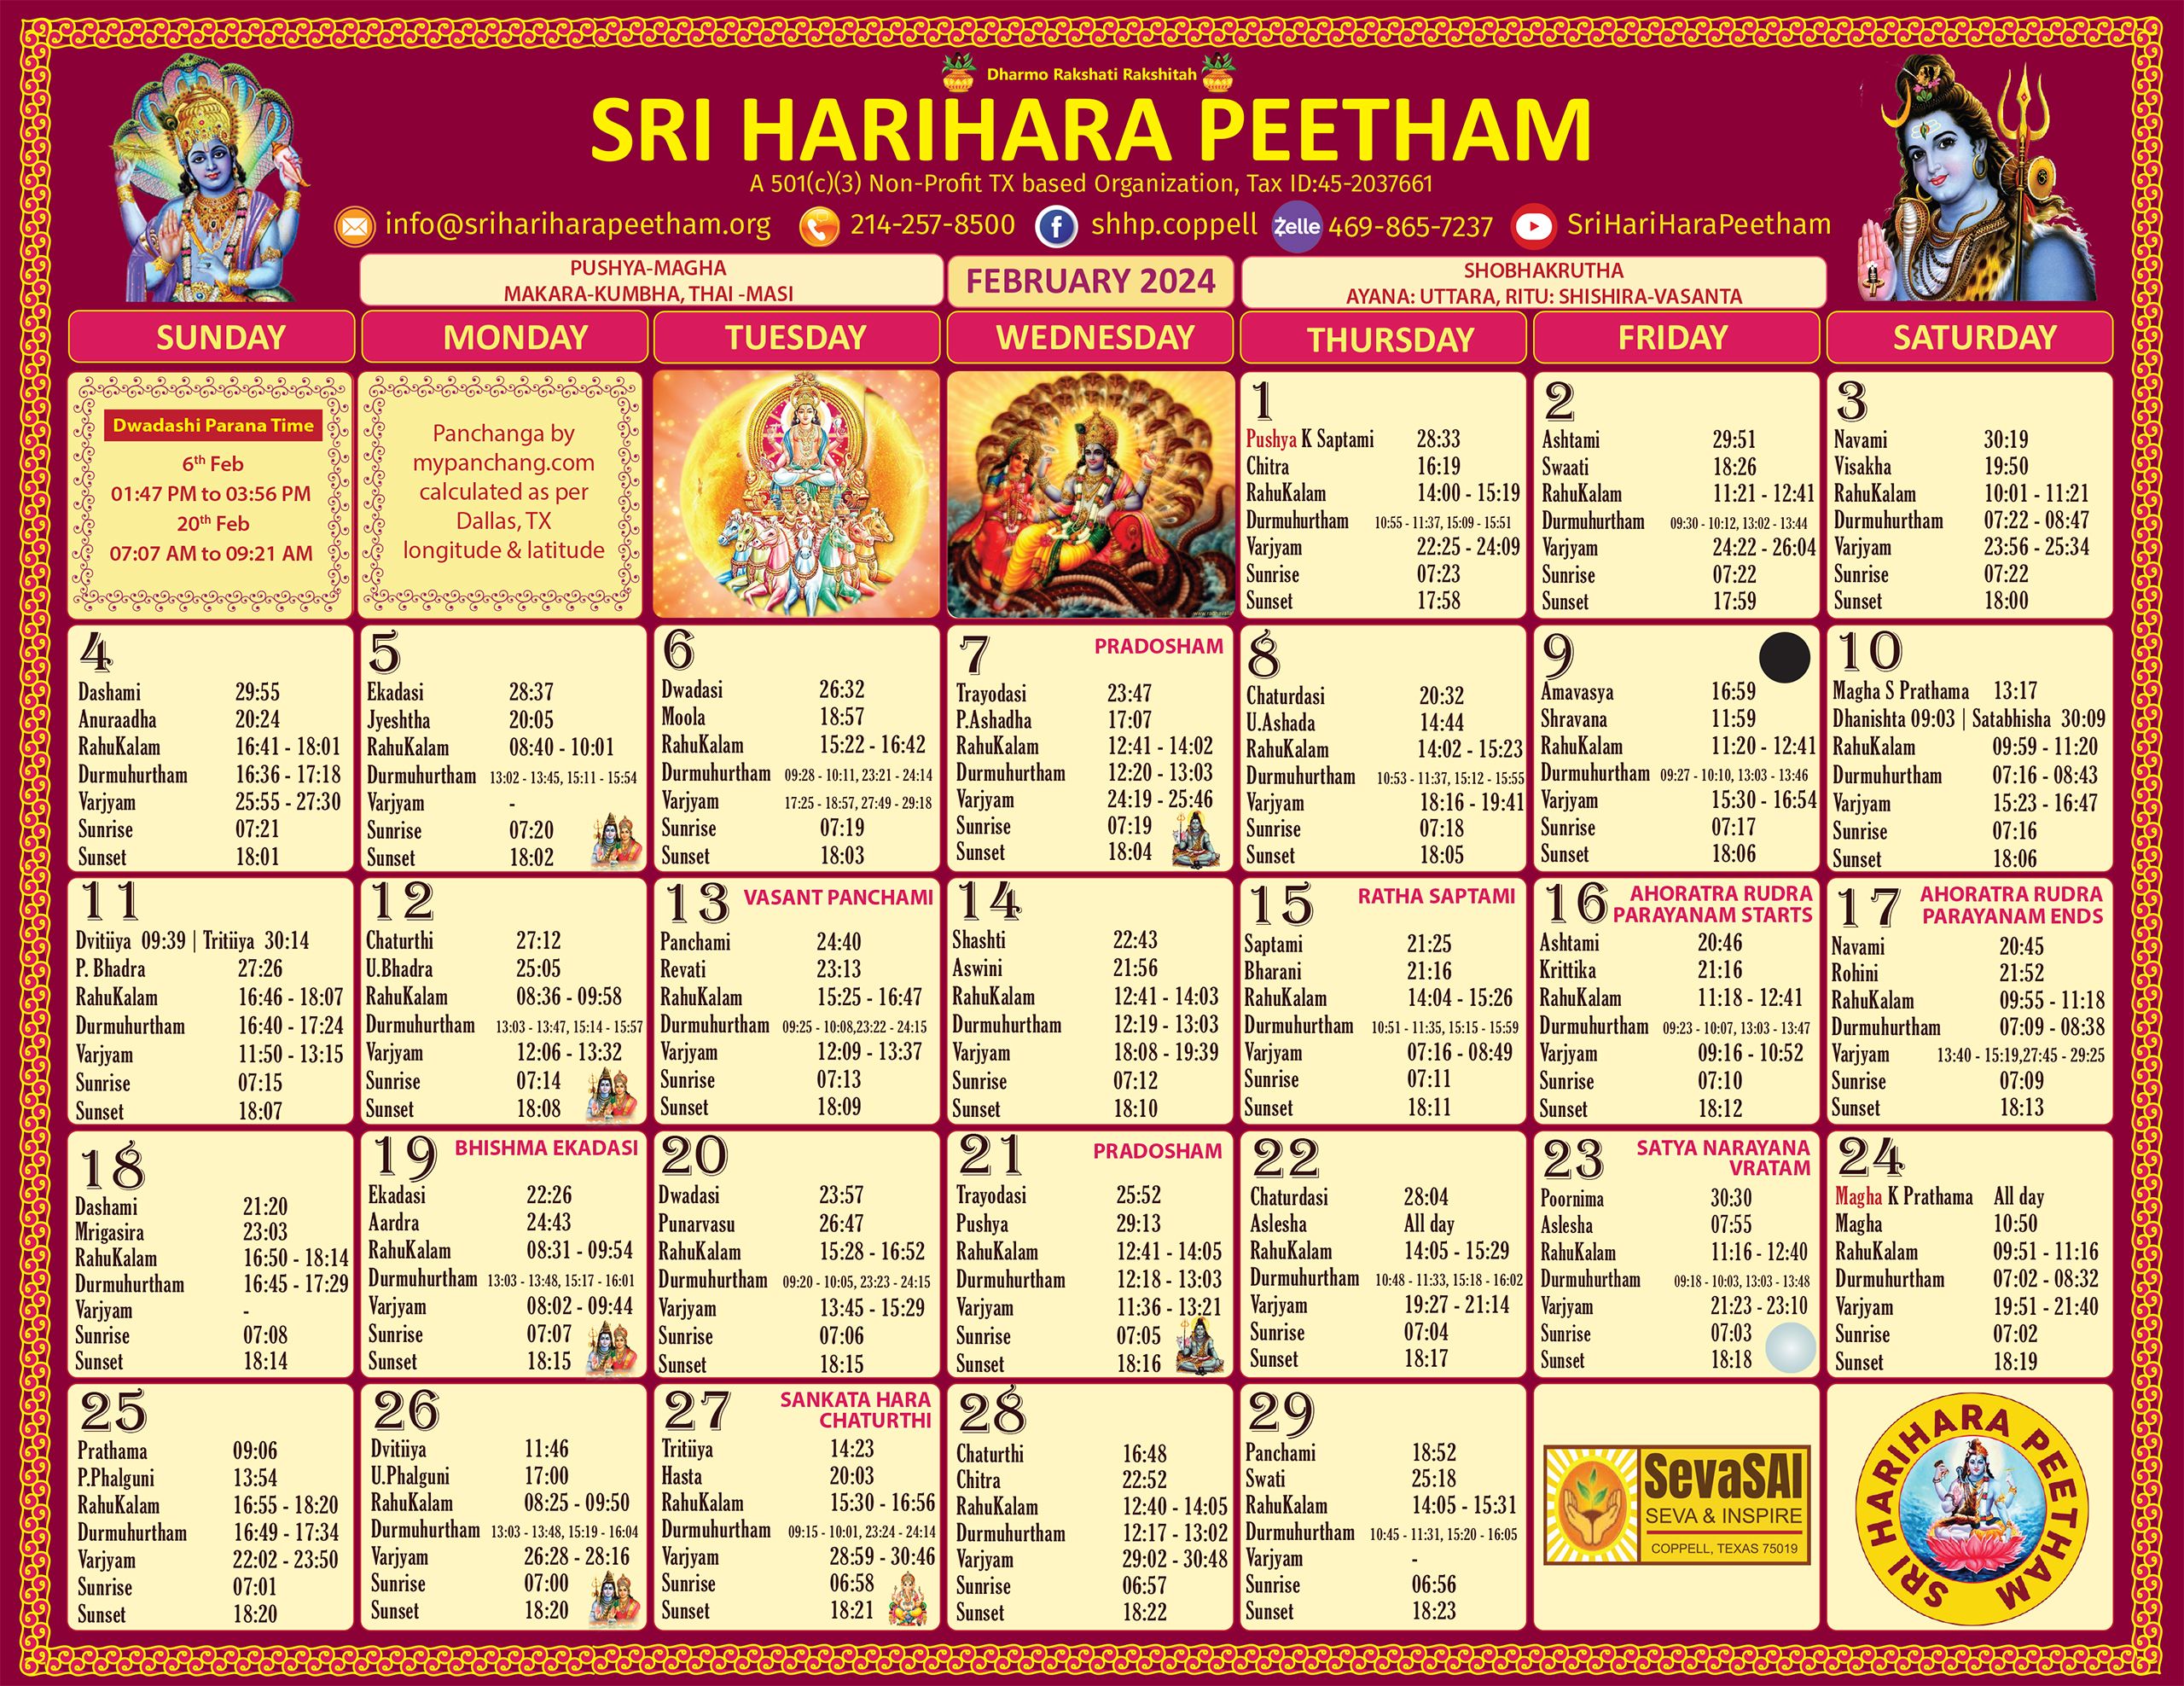 Sri HariHara Peetham's February 2024 calendar page